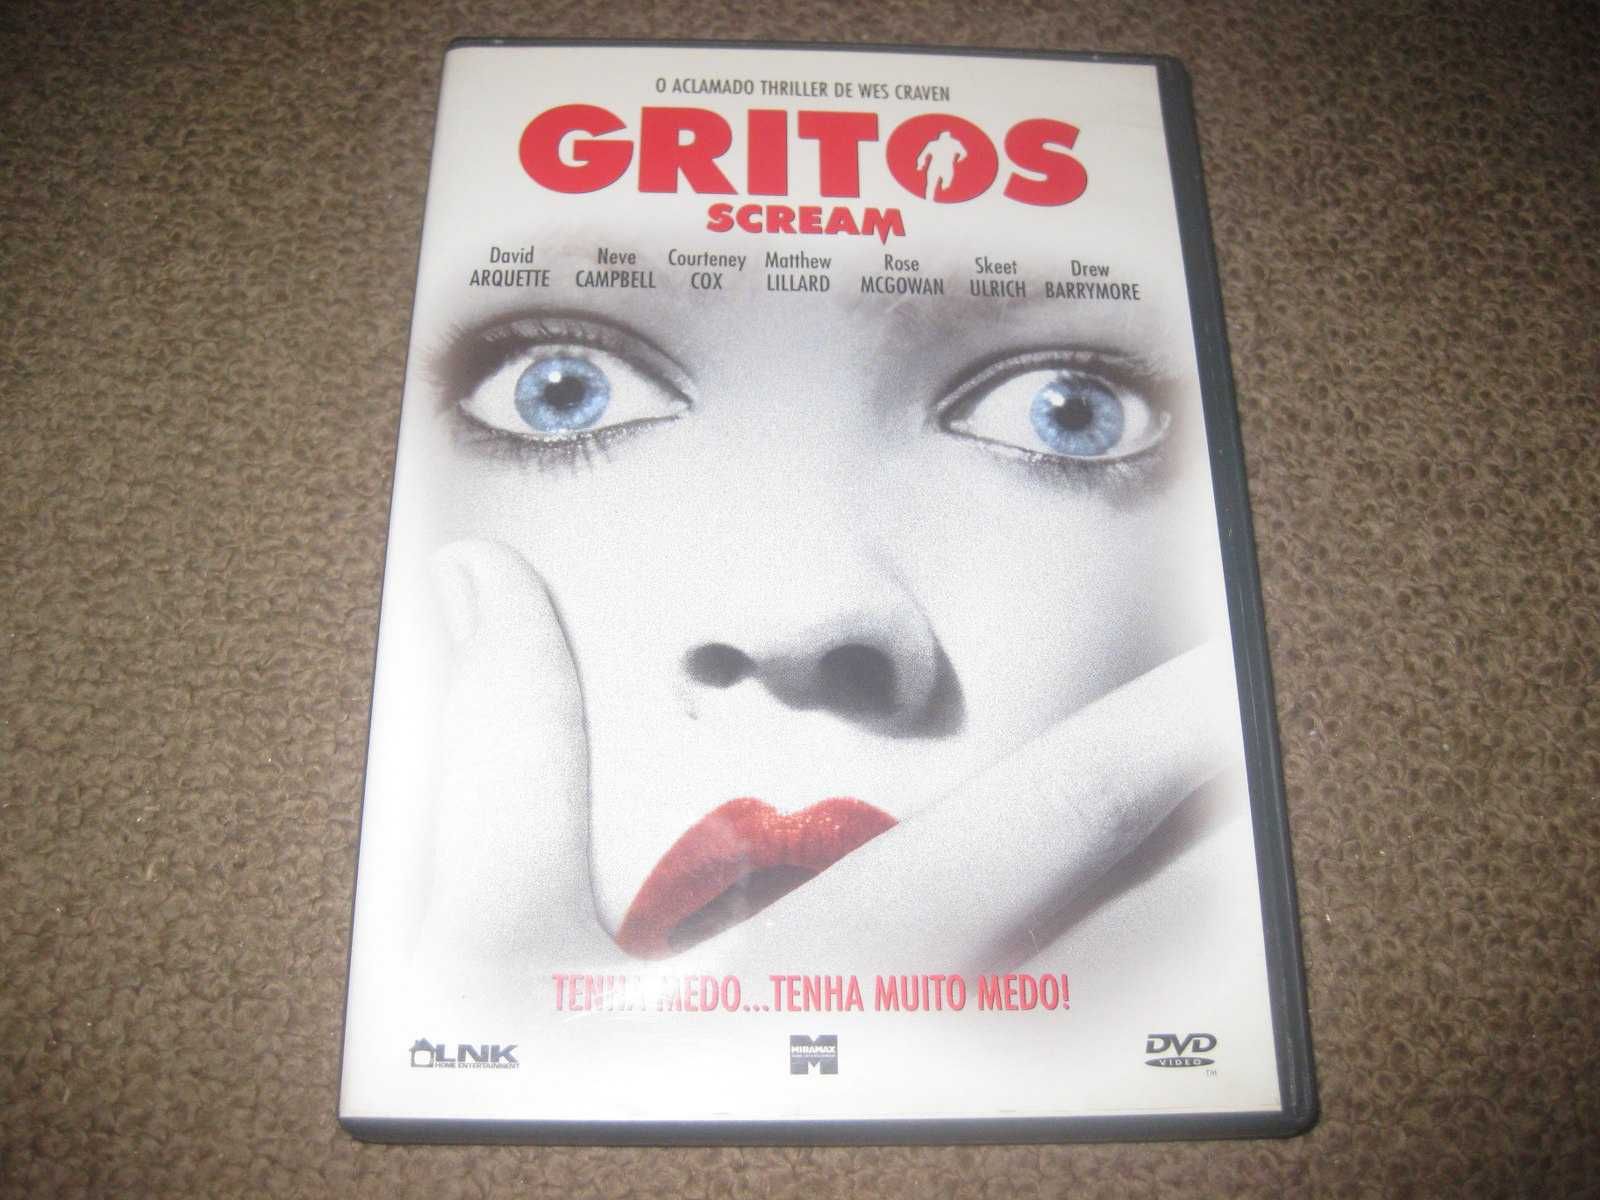 DVD "Gritos" de Wes Craven